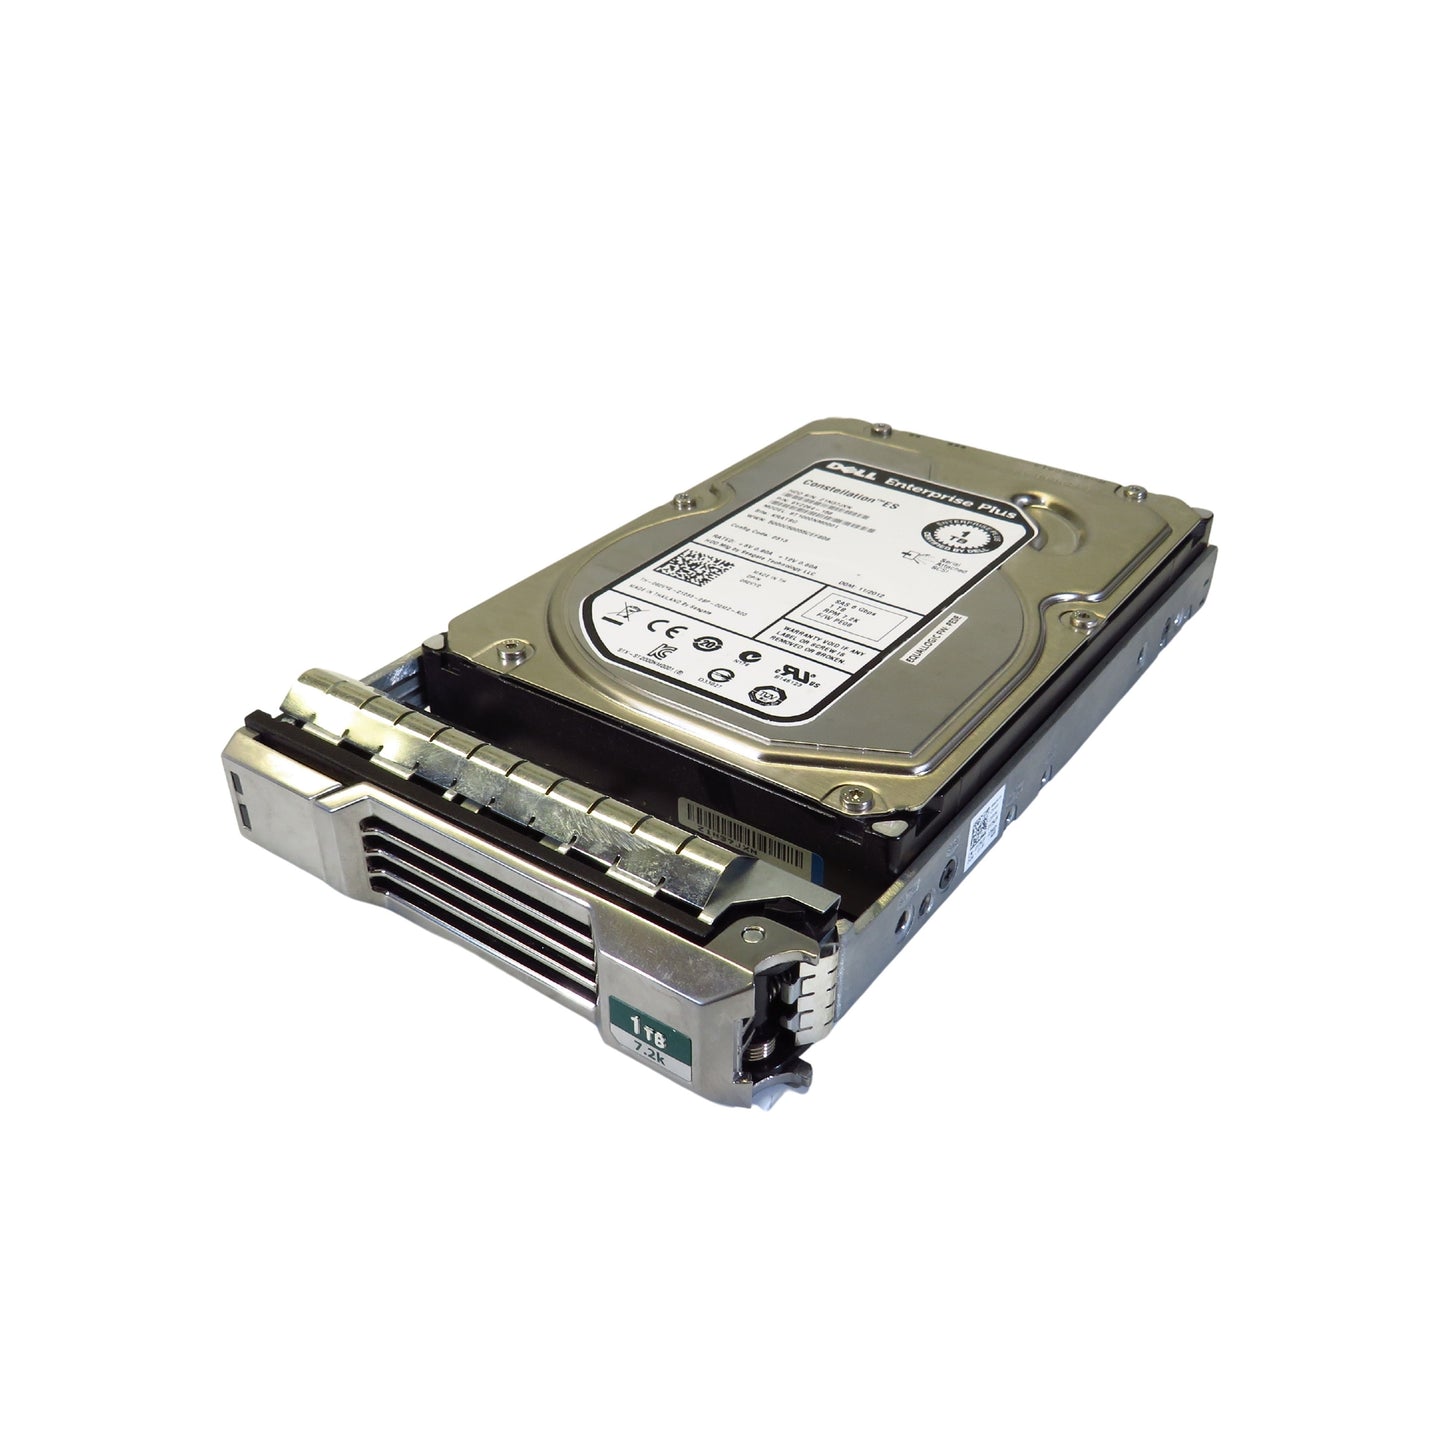 EqualLogic 62VY2 1TB 7.2K RPM 3.5" SAS 6Gbps LFF HDD Hard Drive (Refurbished)